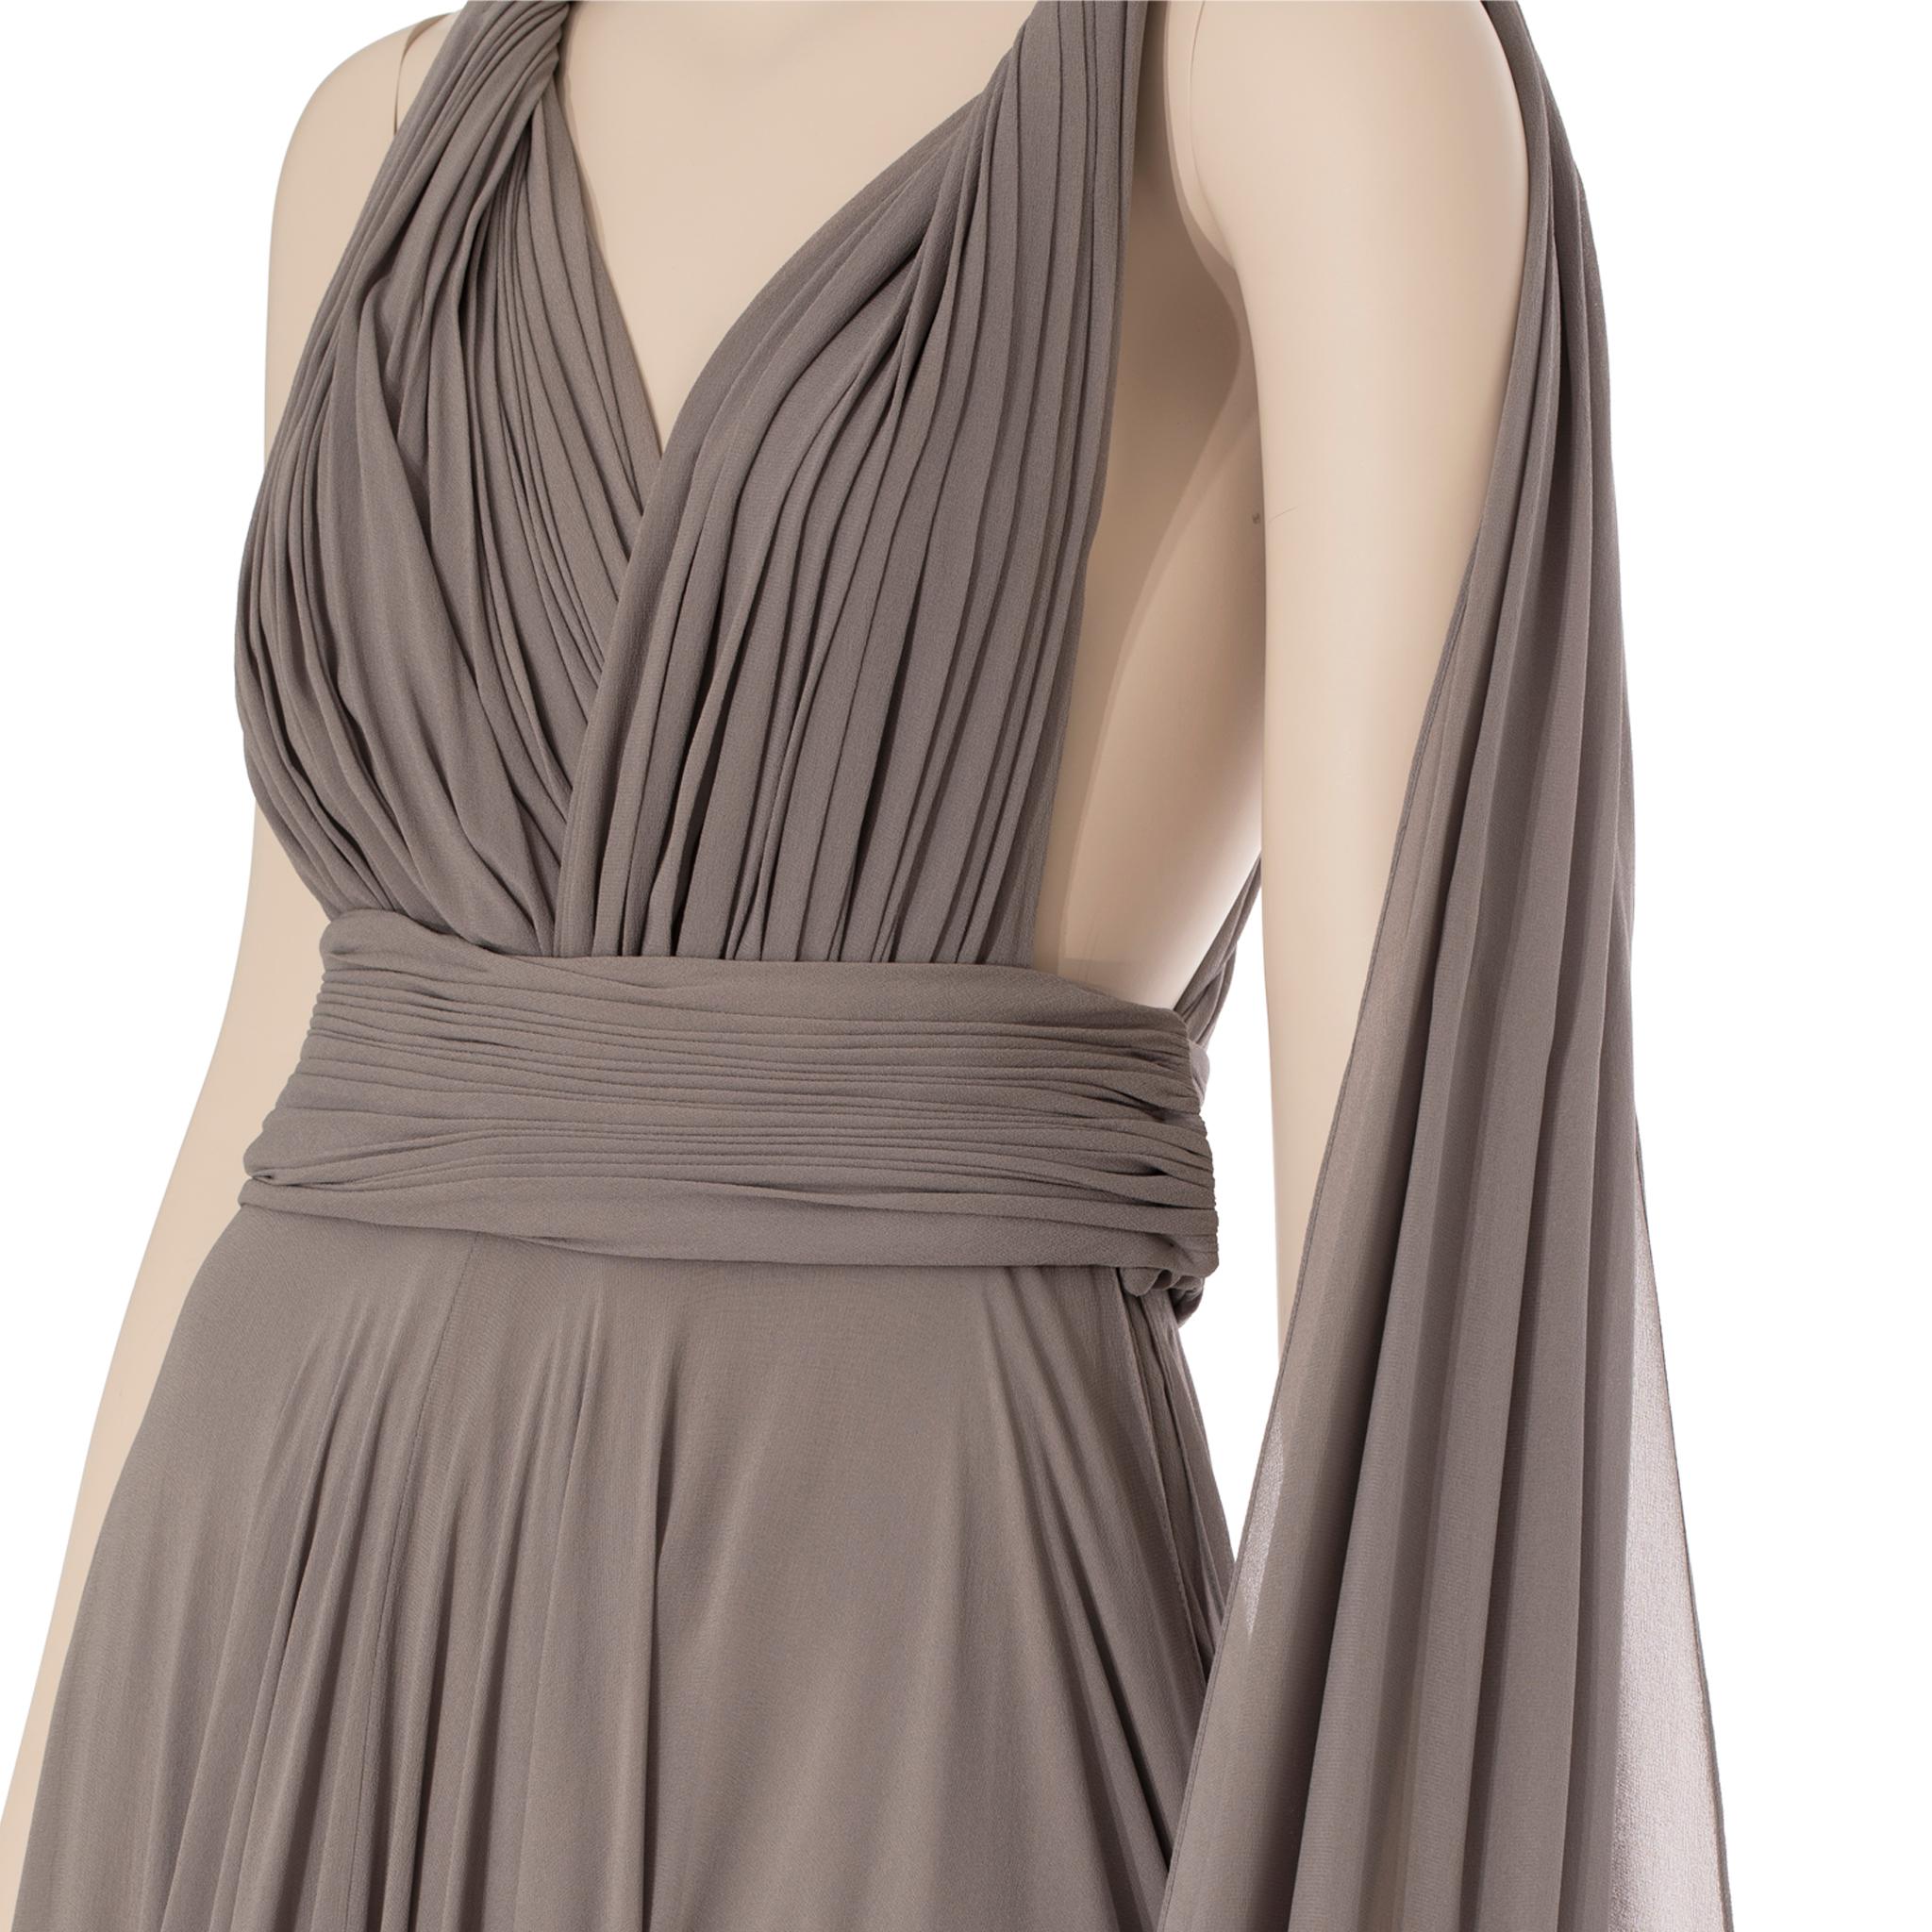 Yves Saint Laurent Couture Grey Evening Dress 36 Fr 4